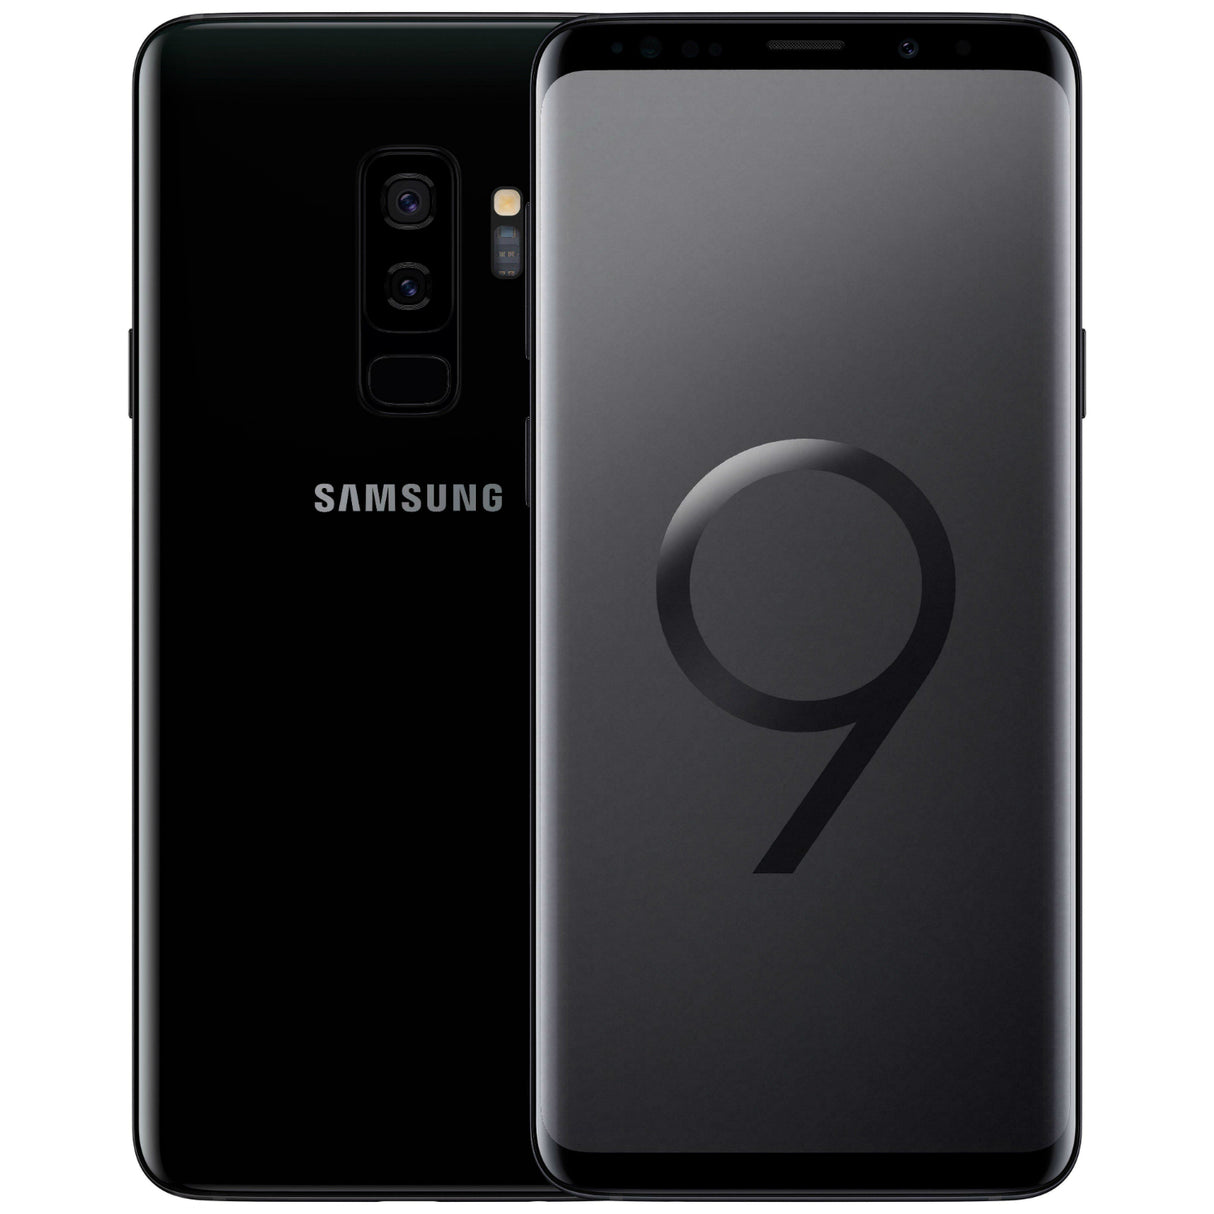 Samsung Galaxy S9+ - 128 GB - Midnight Black - Unlocked - GSM